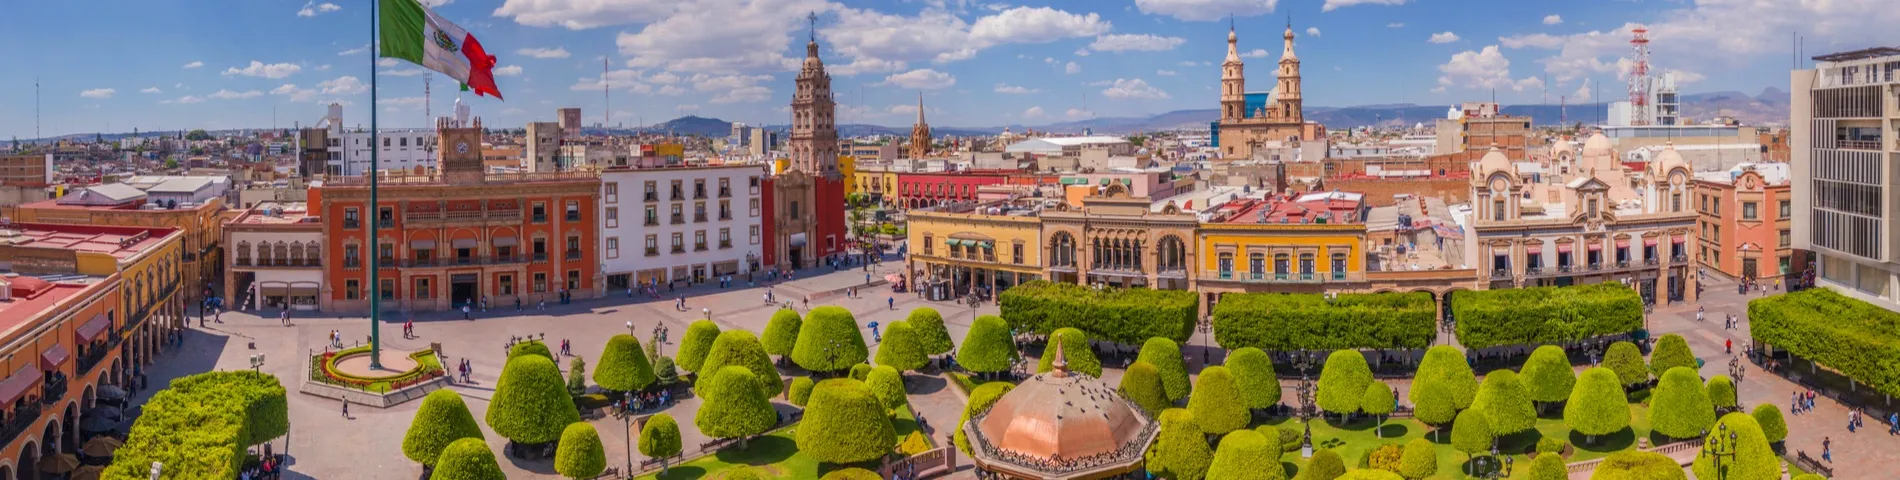 Guanajuato - Curs Estàndard*